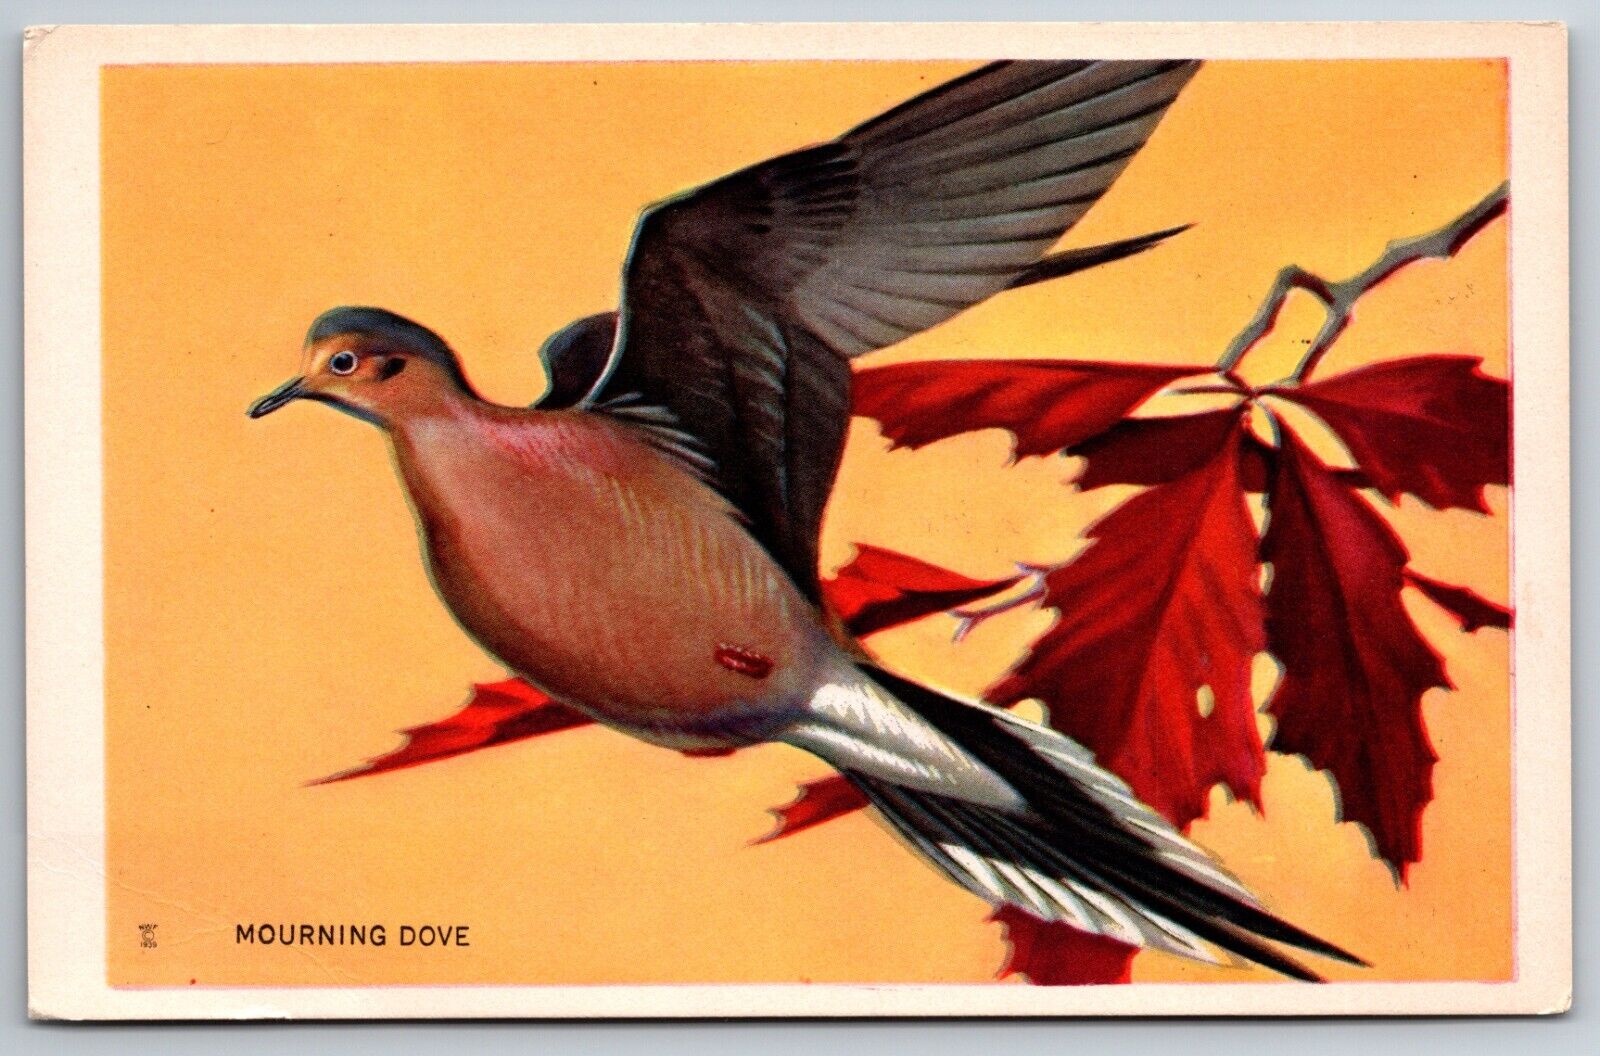 Mourning Dove 1939 National Wildlife Federation Postcard